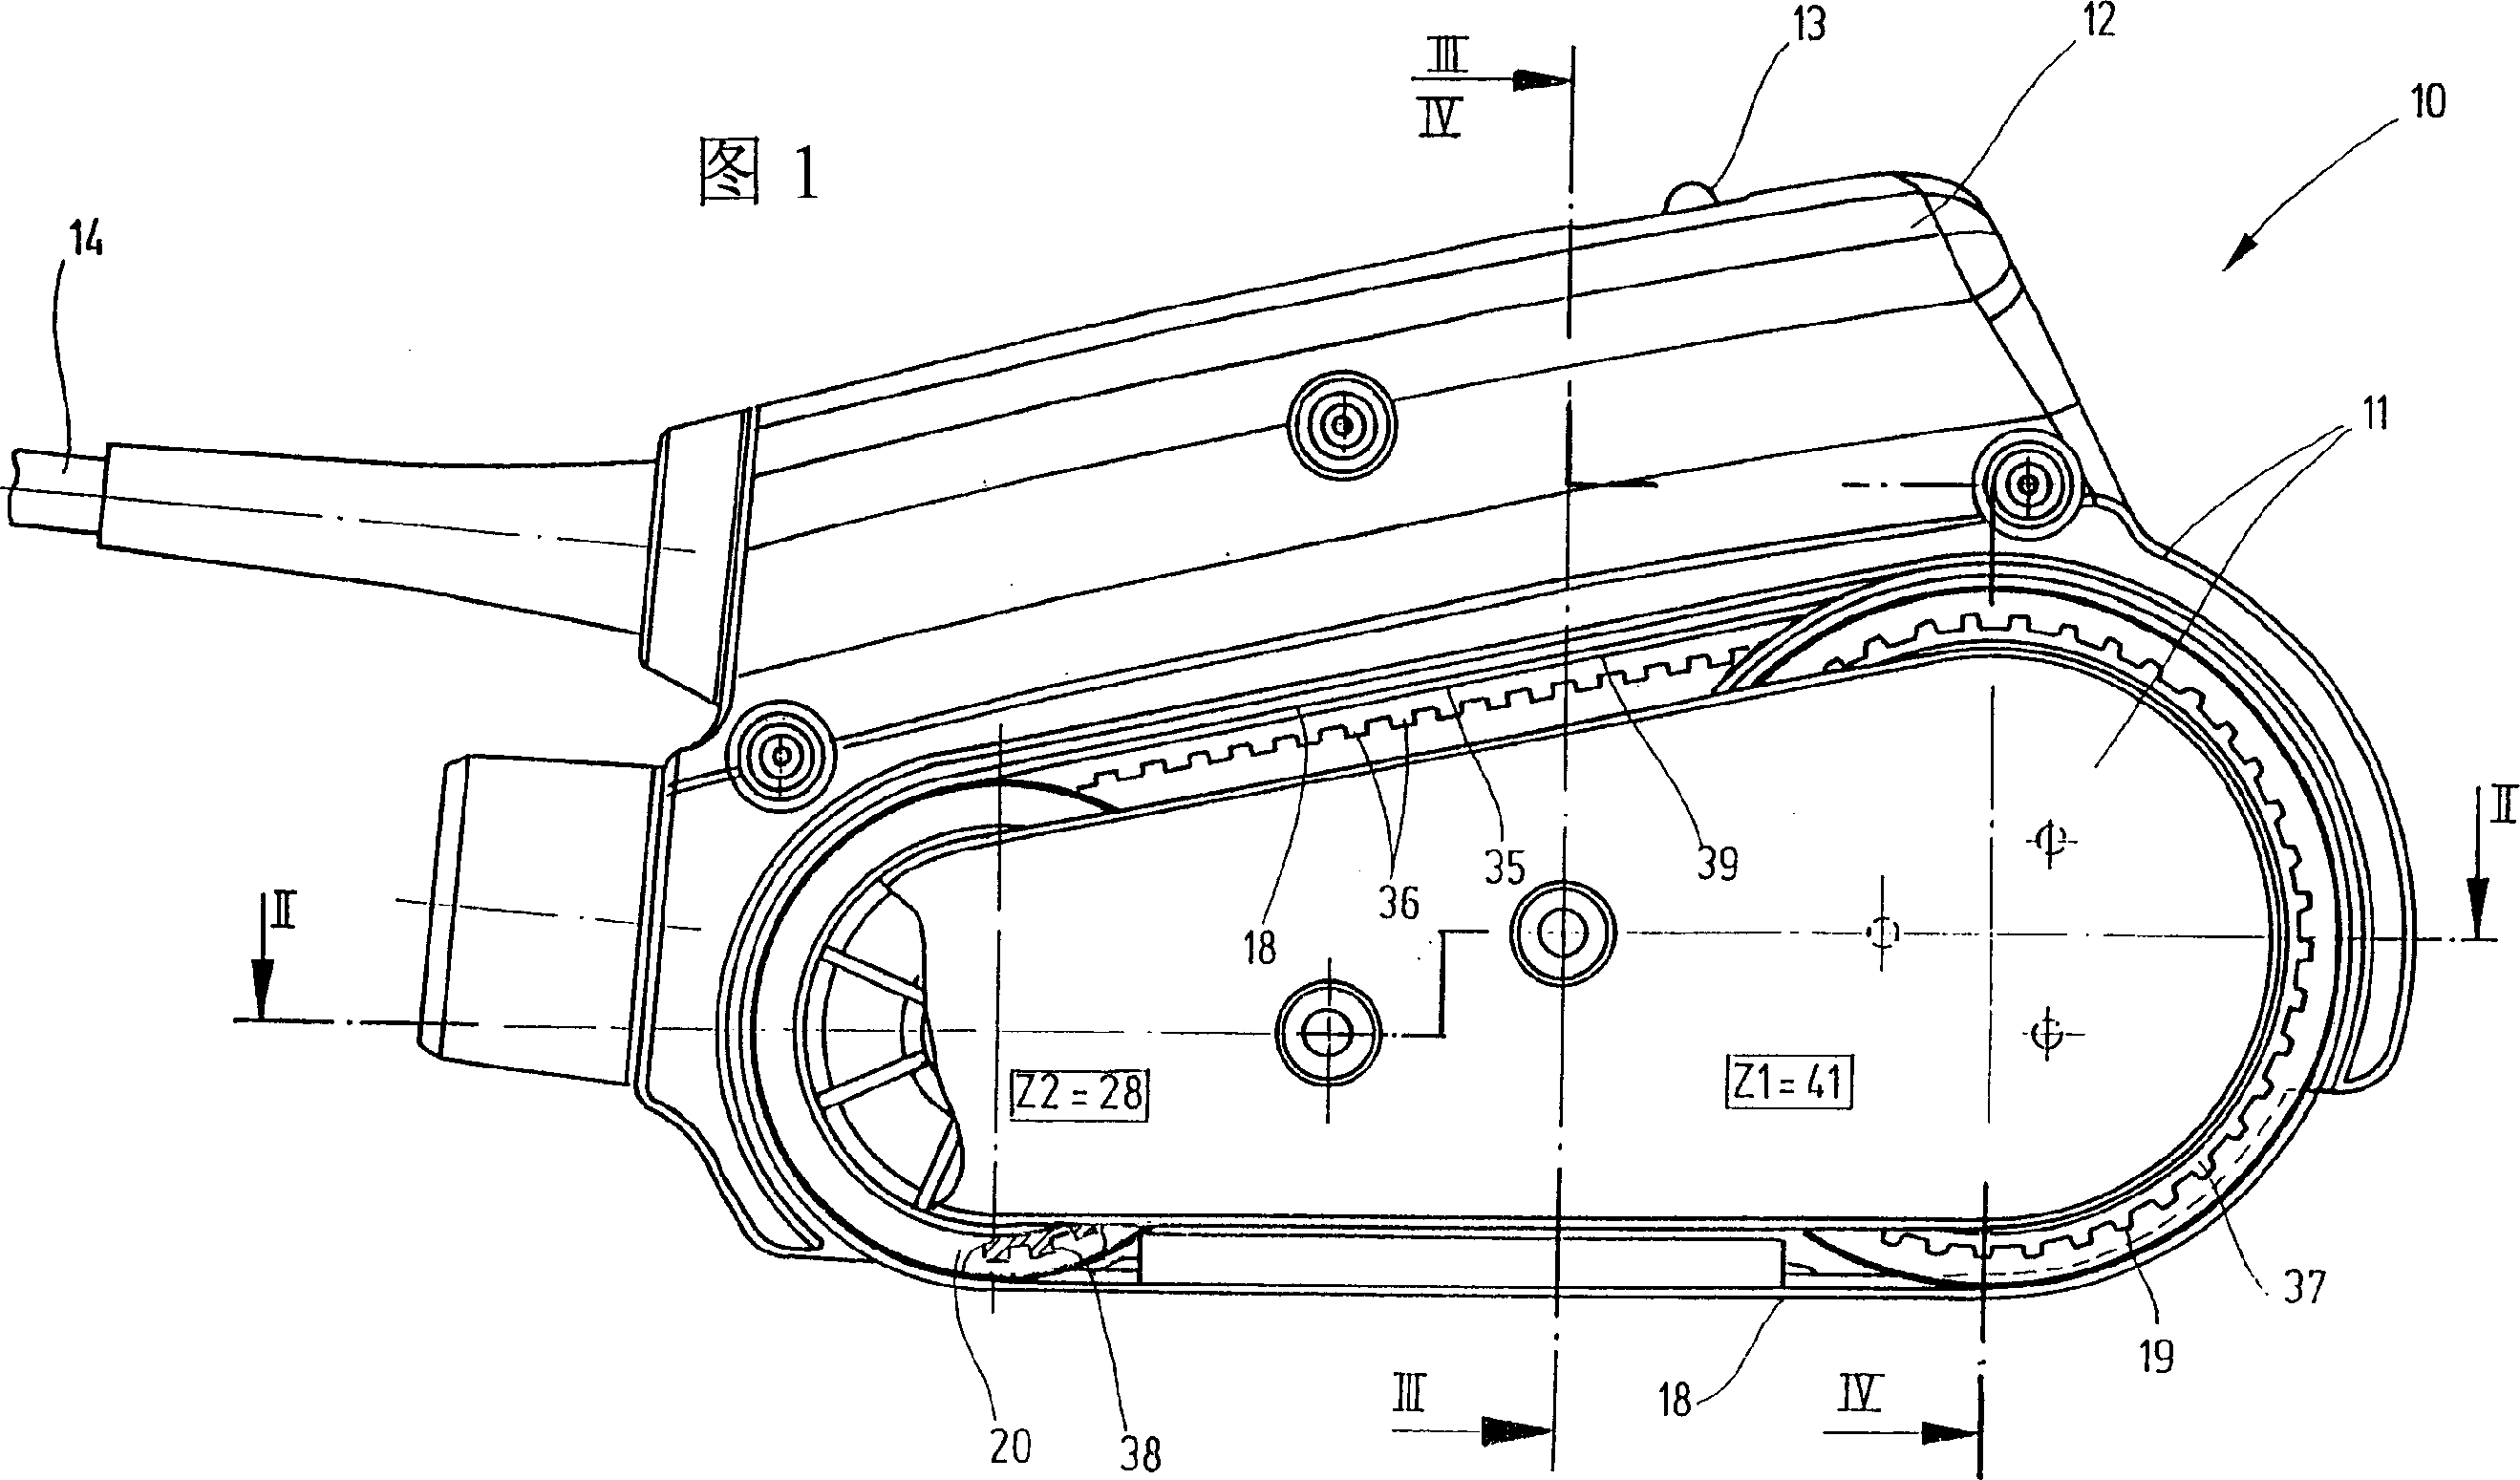 Hand operated belt sander